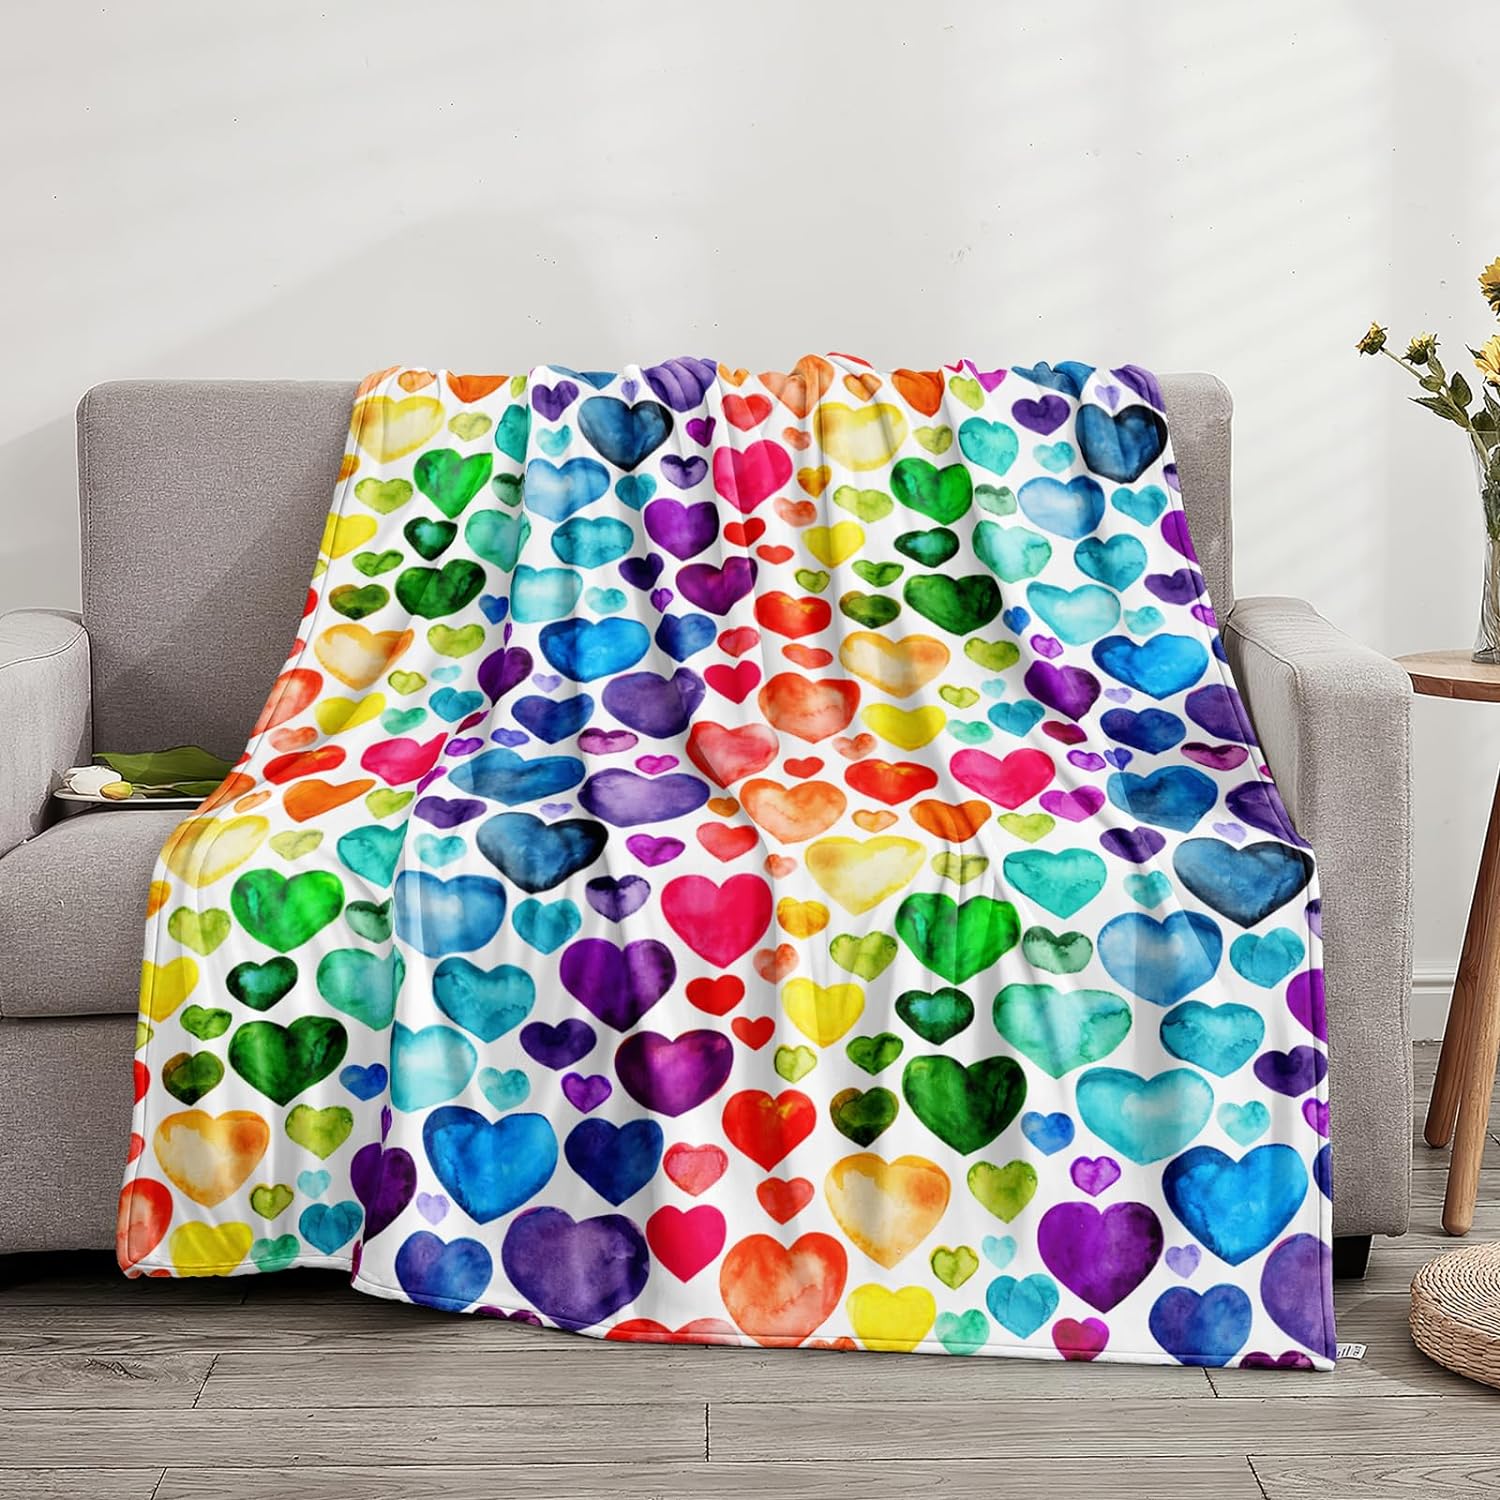 Bedbay Throw Blanket for Couch Sofa Colorful Love Heart Couple Lovers Blanket Boys Girls Teen Soft Flannel Fleece Blanket Rainbow Heart Shaped Decor All Season (Colorful, Throw(50x60))